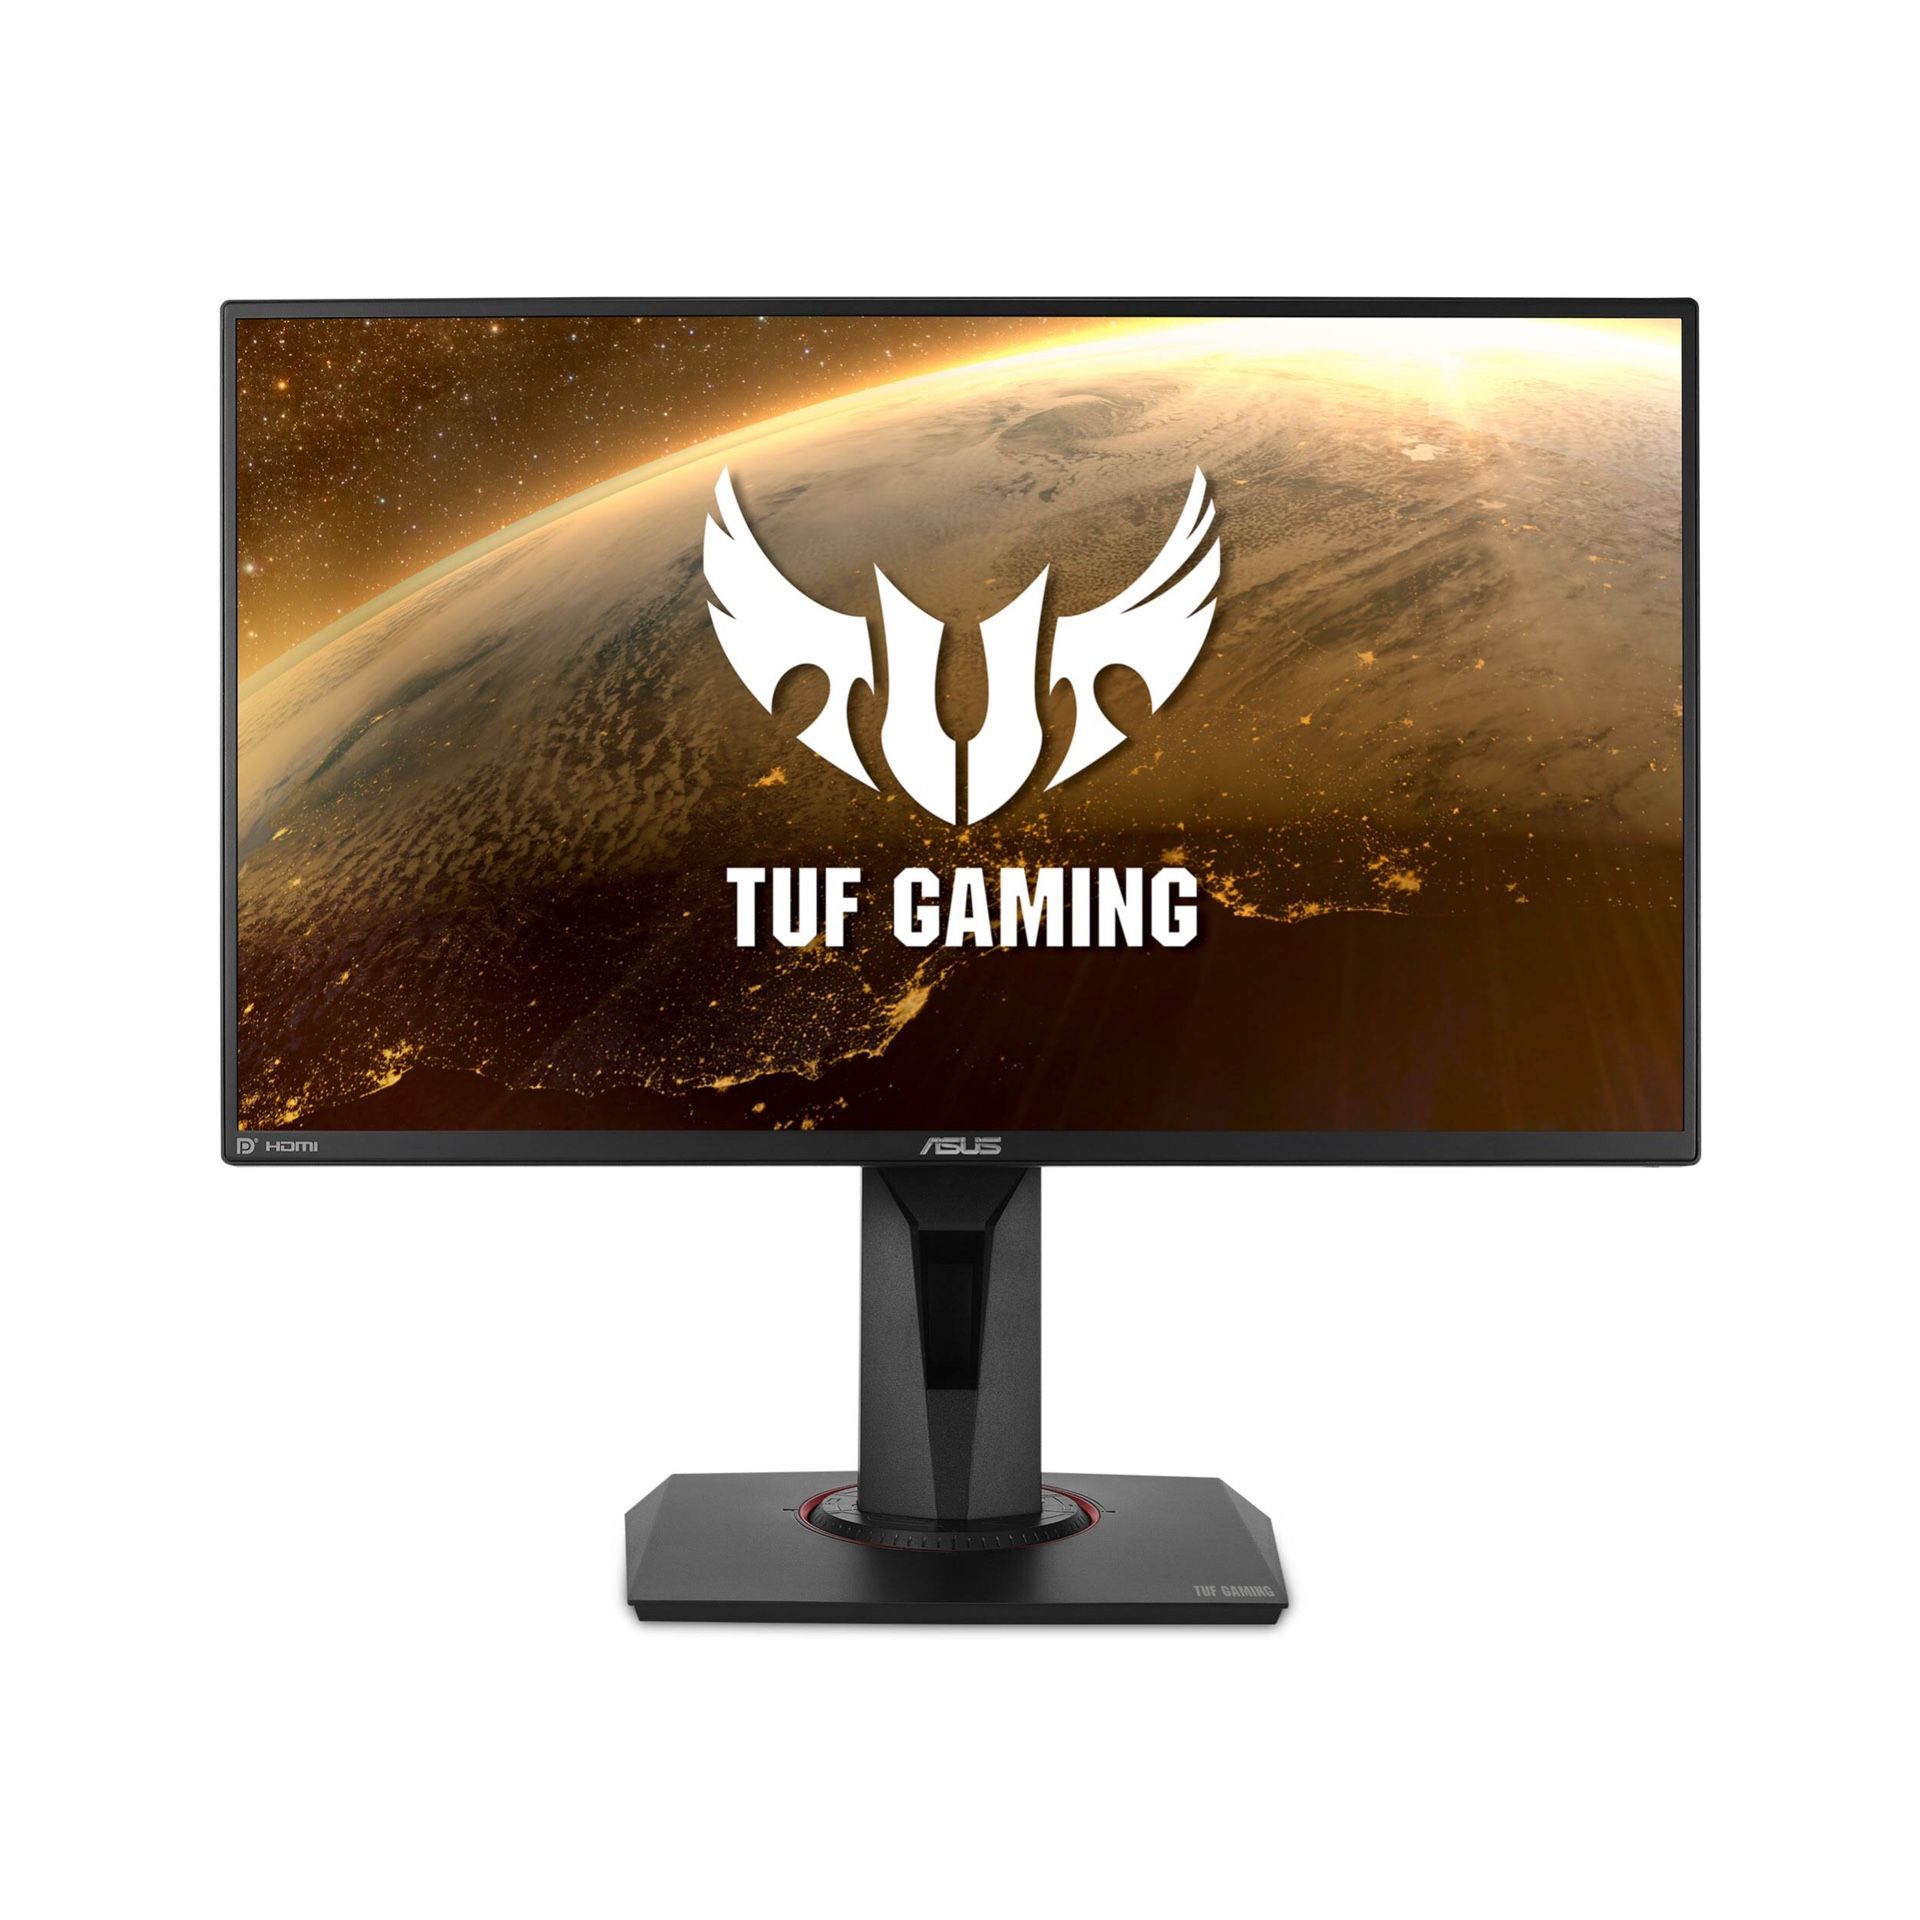 ASUS - TUF Gaming VG249Q 144Hz 23.8” IPS LCD FHD 1ms FreeSync Gaming Monitor - Black